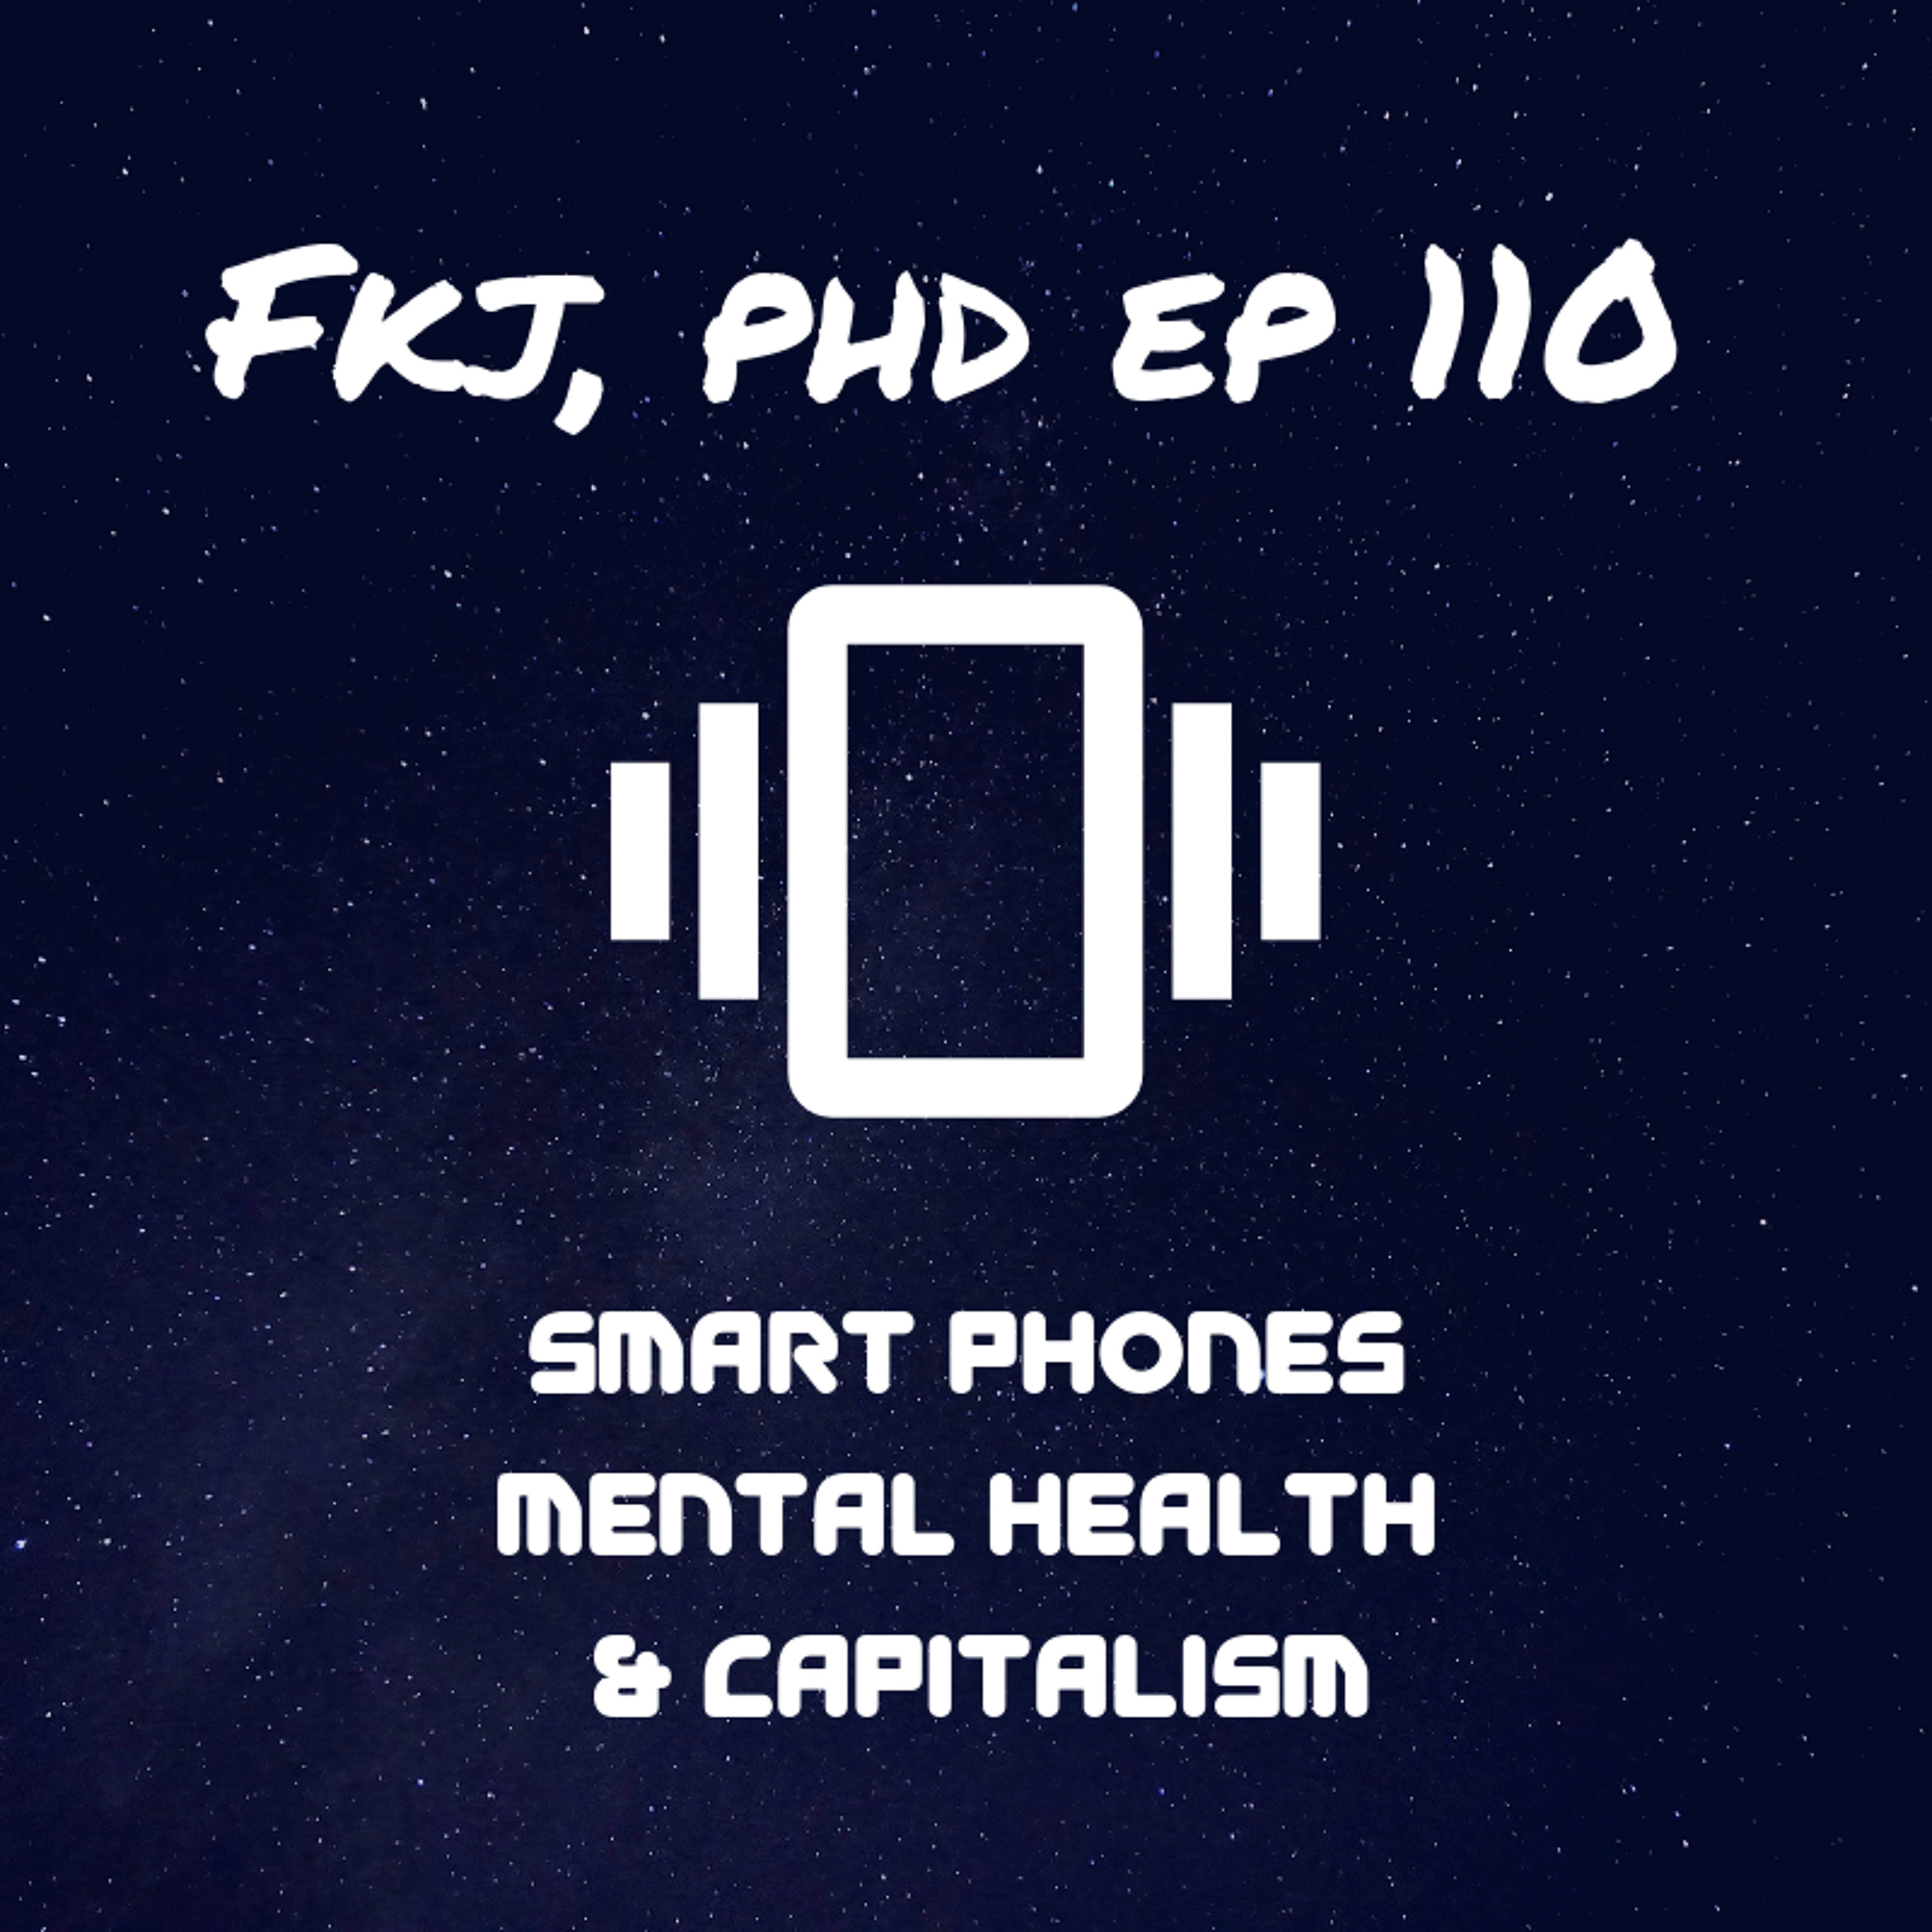 EP 110: Smart phones, mental health, & capitalism